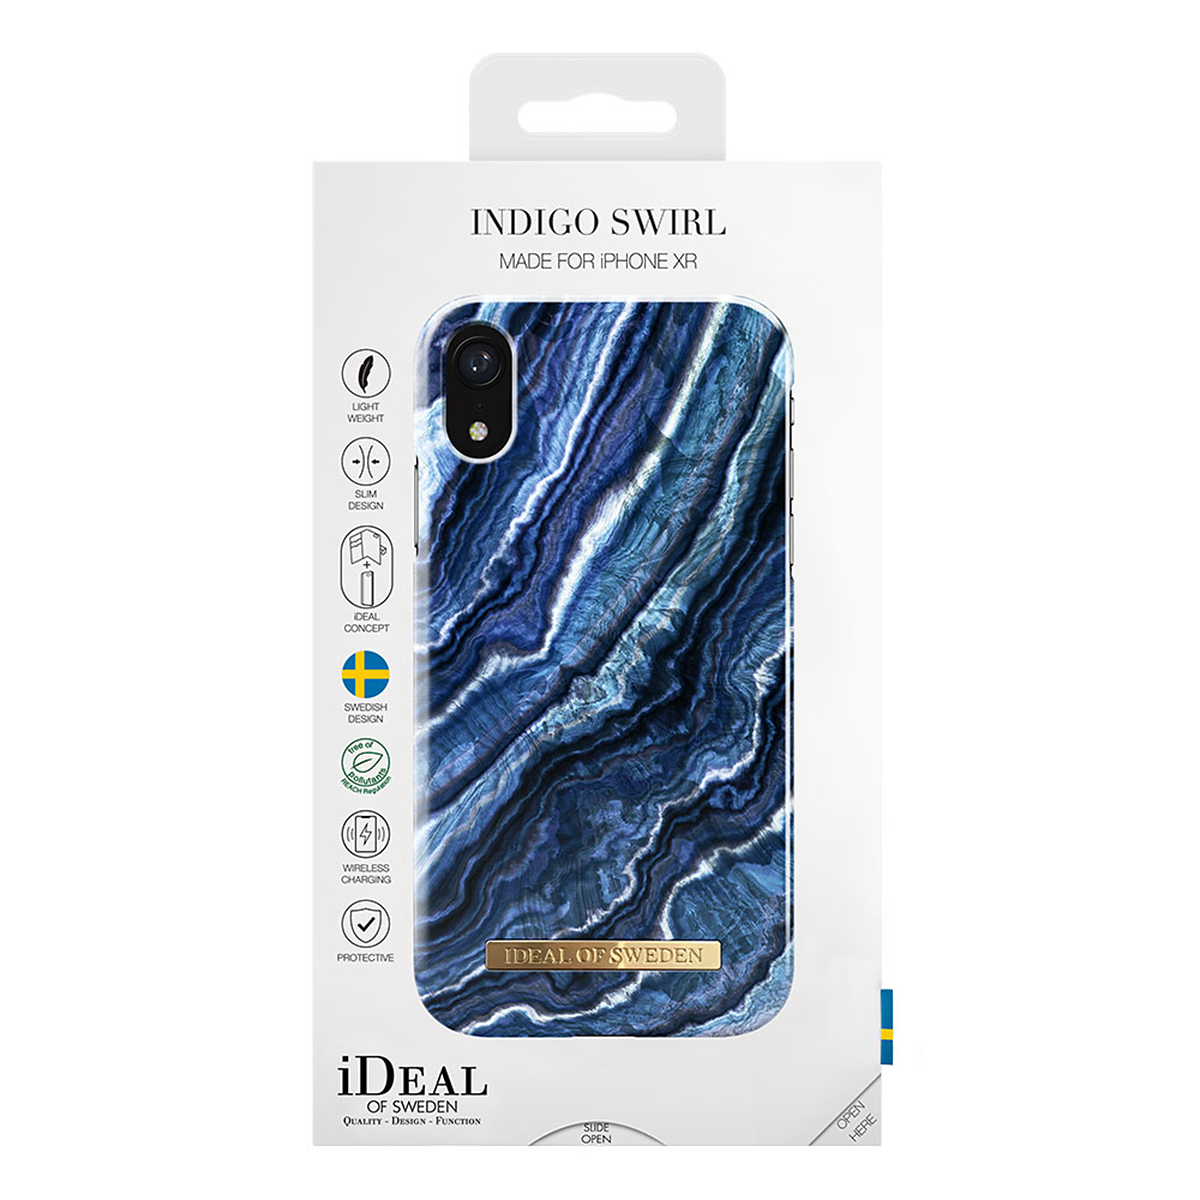 iDeal Fashion Case magnetskal iPhone XR, Indigo Swirl